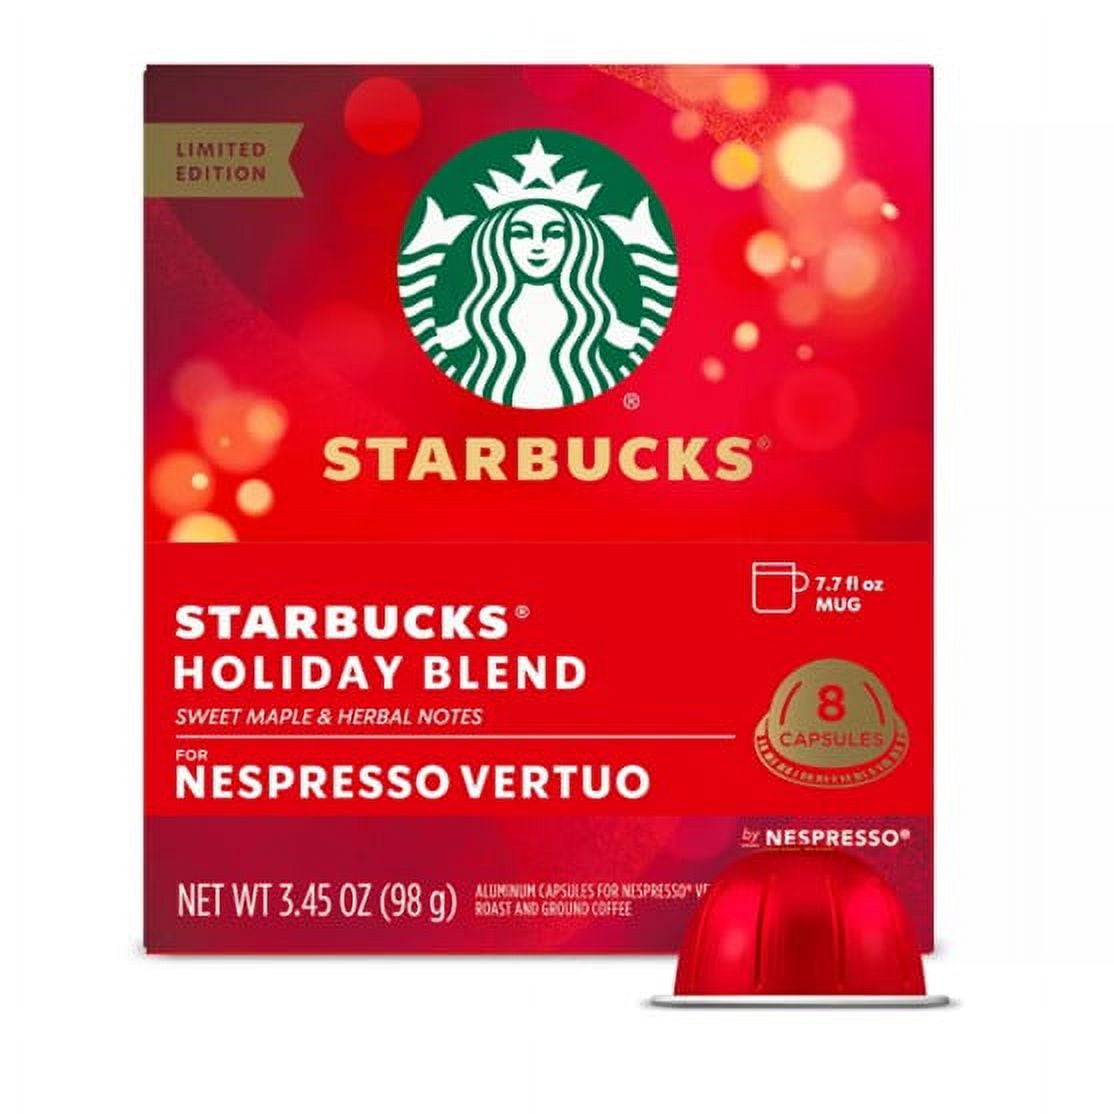 Starbucks Holiday Blend Nespresso Vertuo (8 count) 3.45 oz - Walmart.com